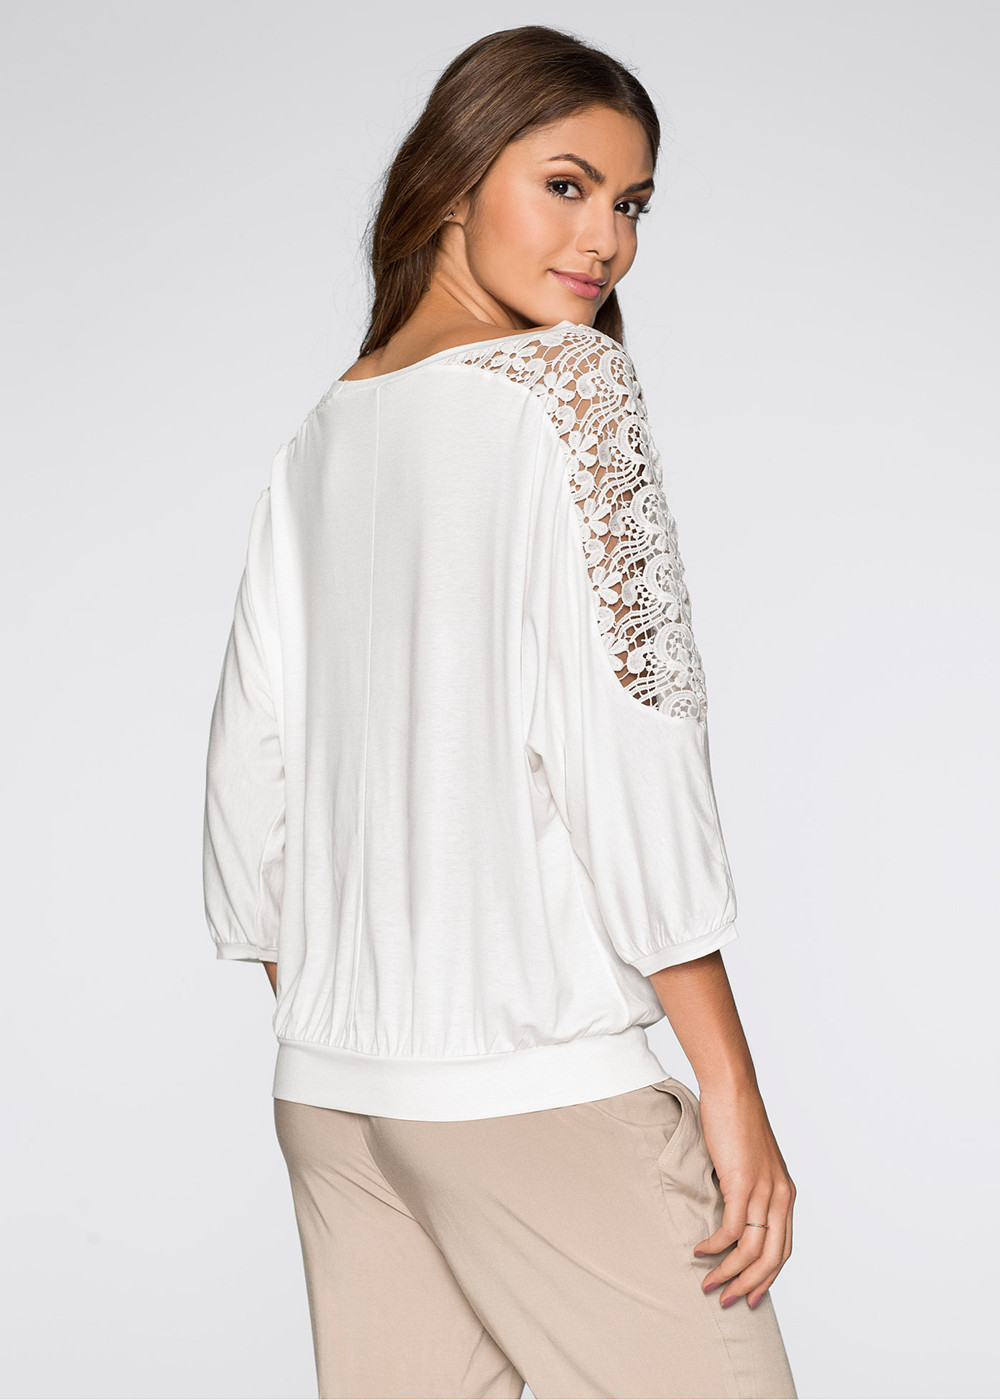 F2489 White Blouse Women Work Wear Lace Insert Sleeve Cotton Tops